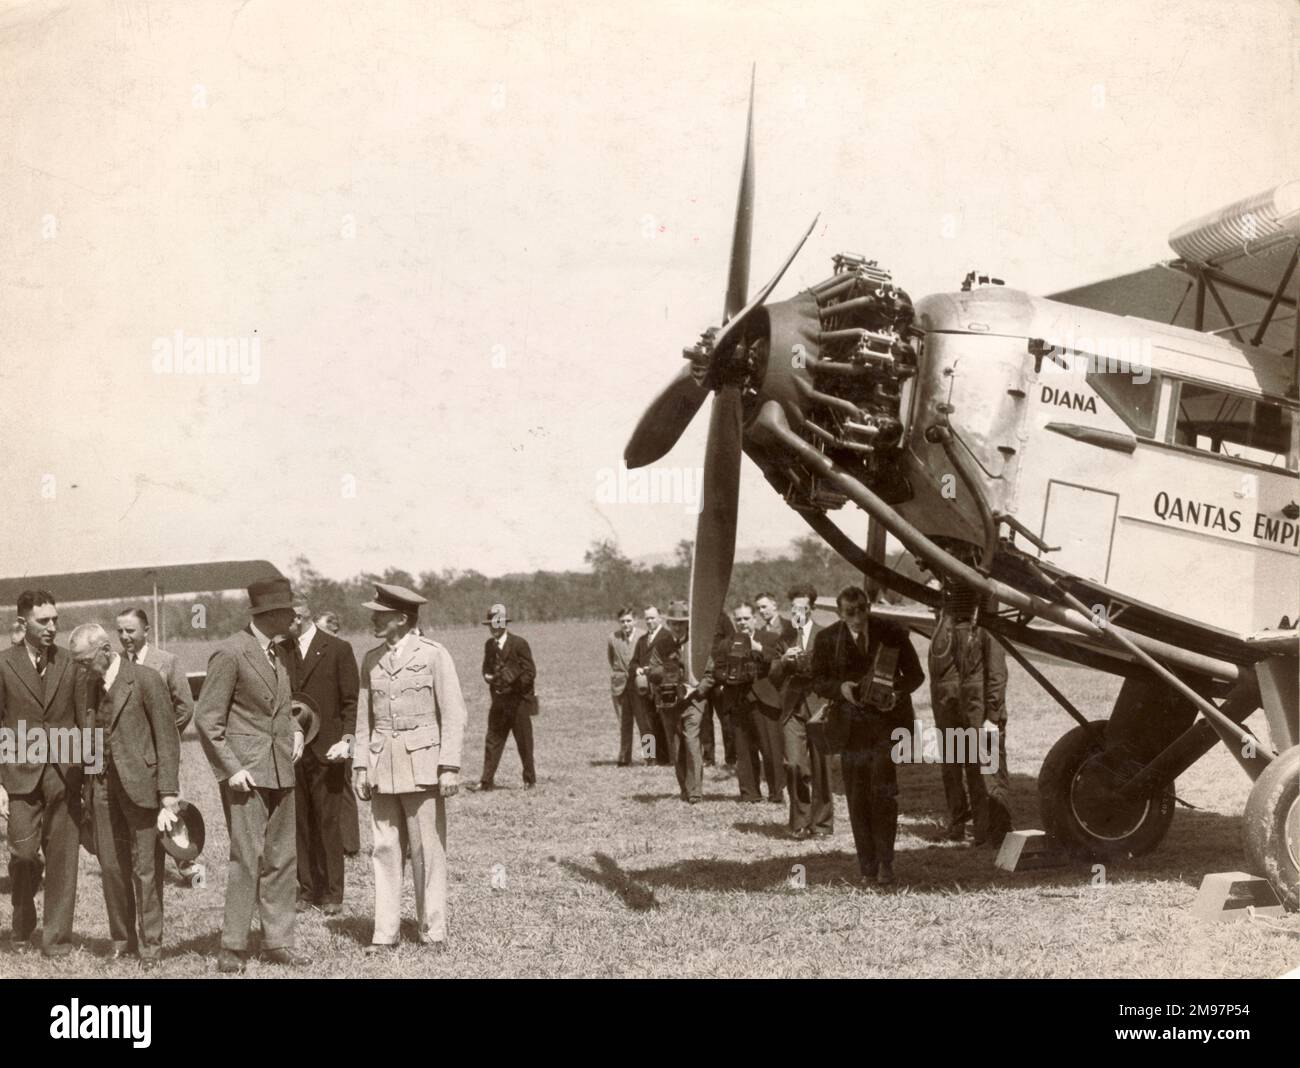 De Havilland DH61 Giant Moth, G-AUJC, Diana, di Qantas. Foto Stock